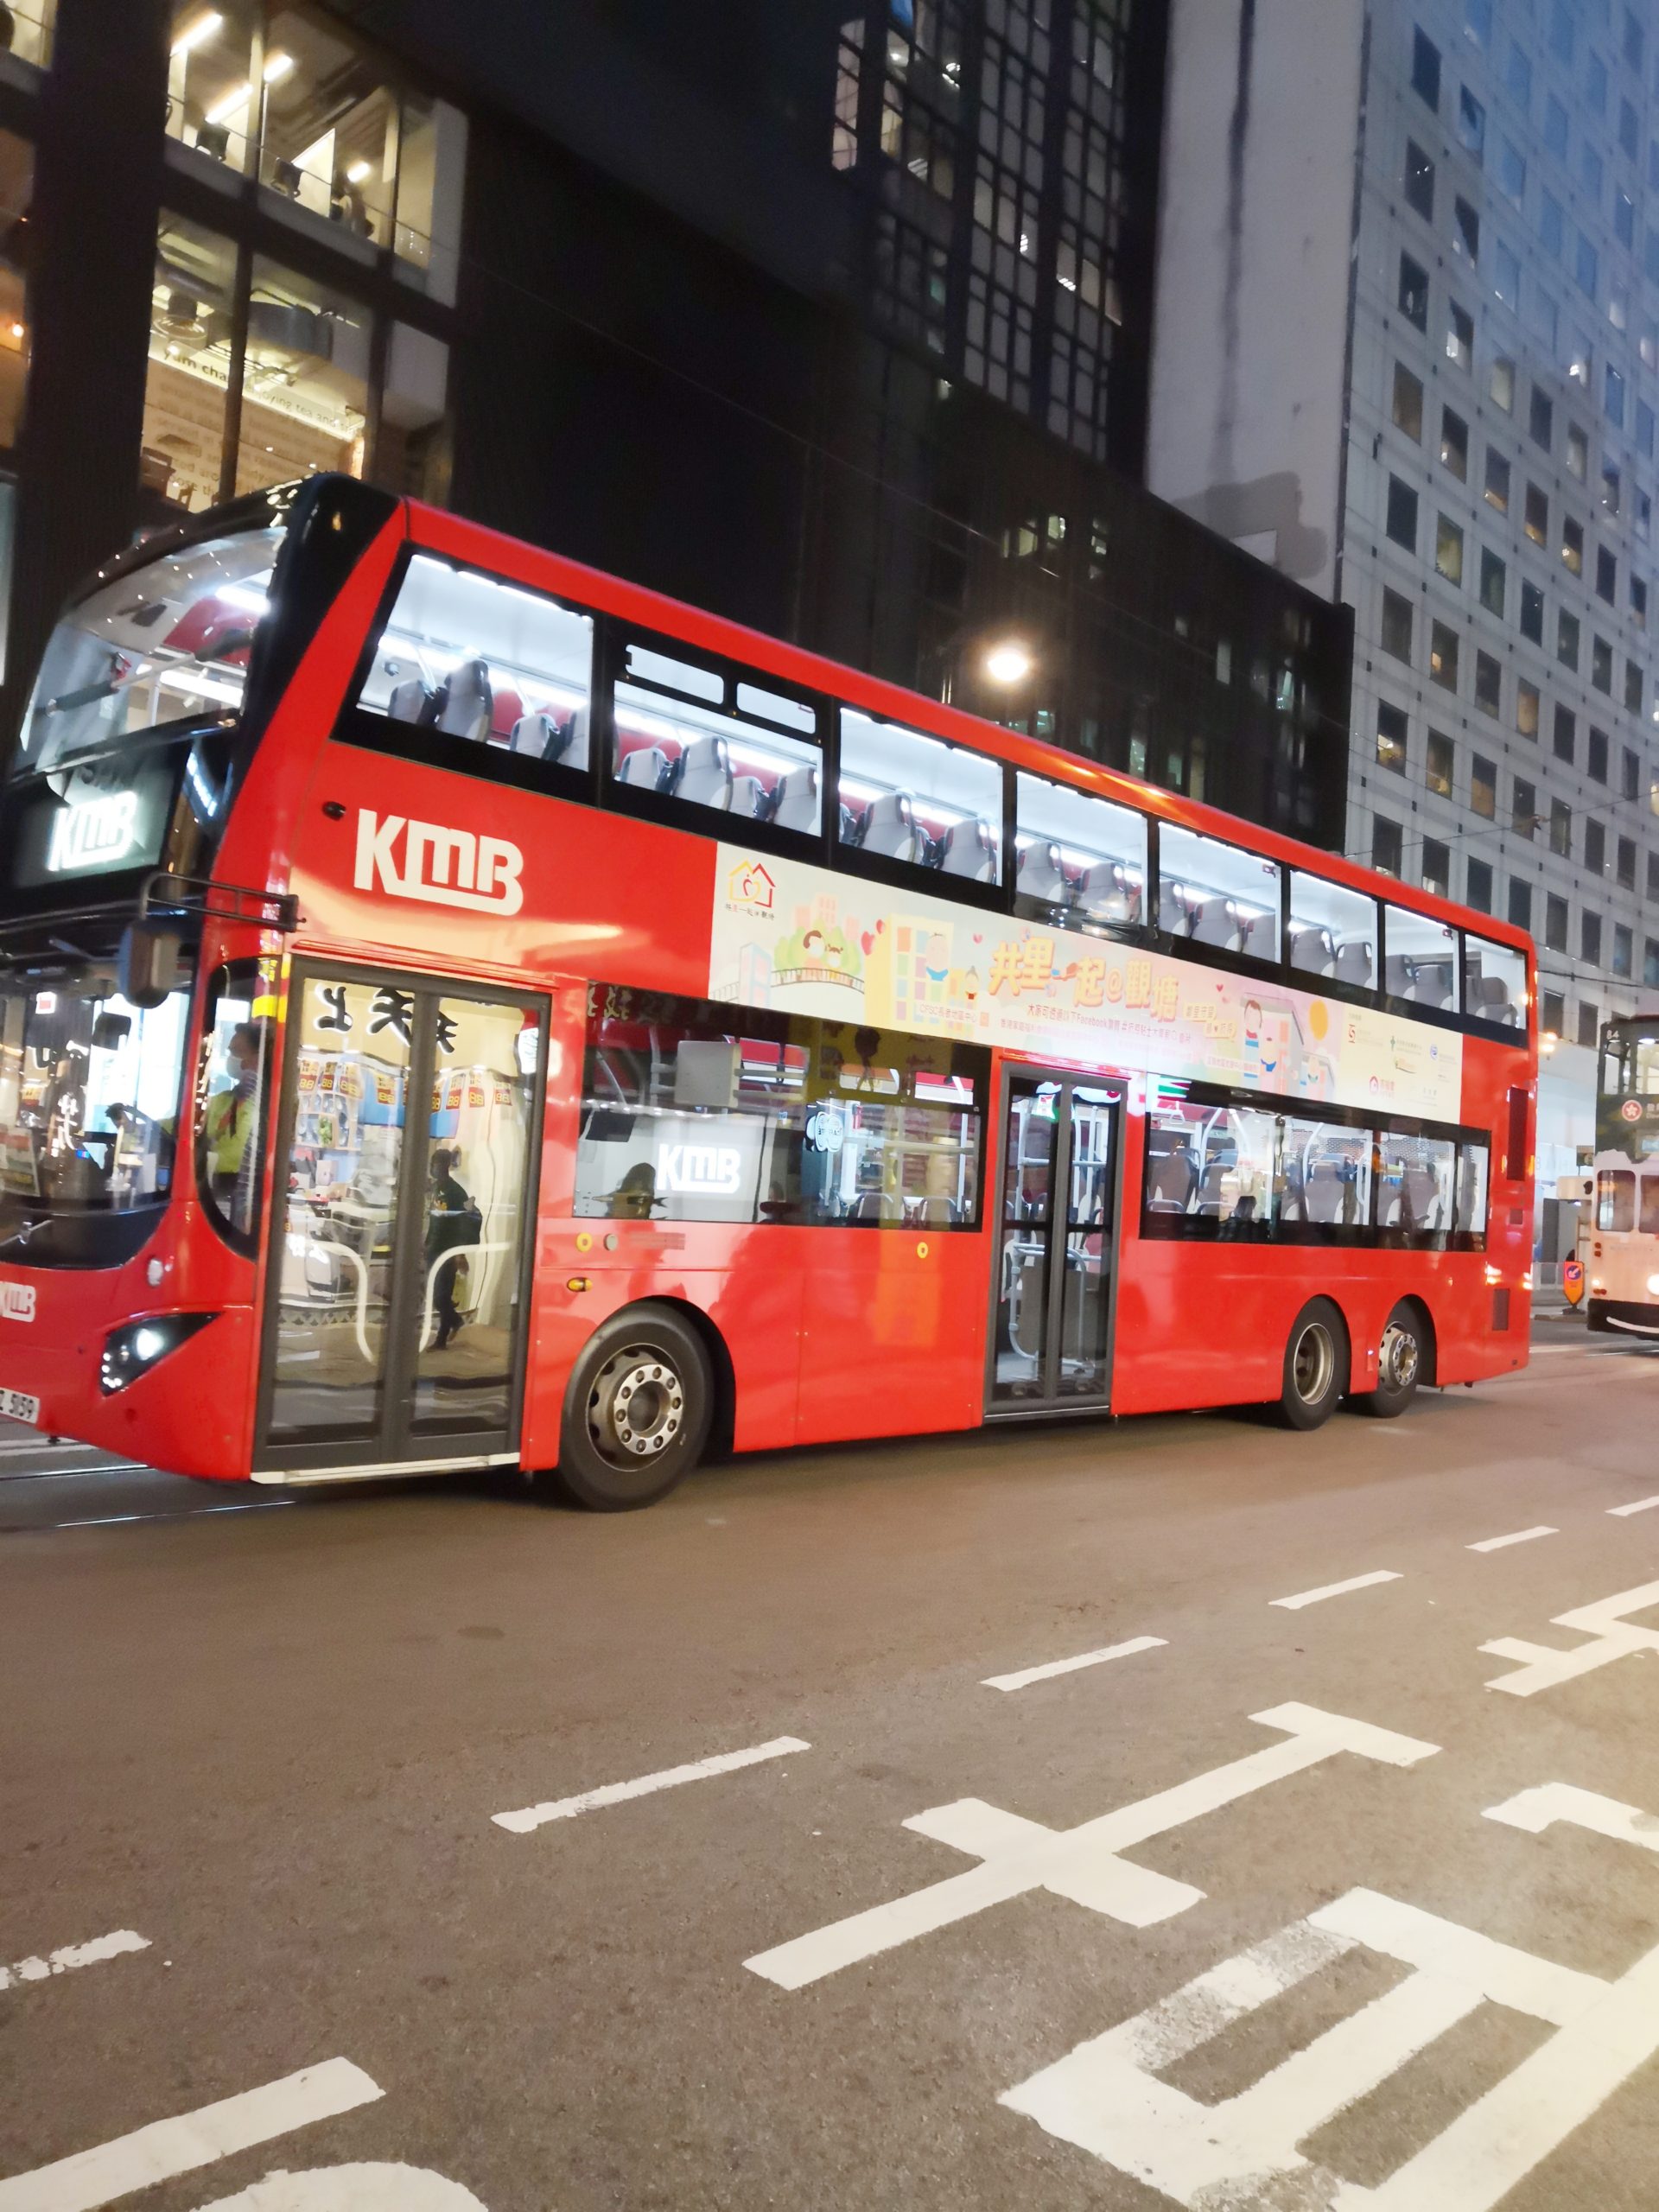 Are Hong Kong public Buses safe & convenient for tourists?